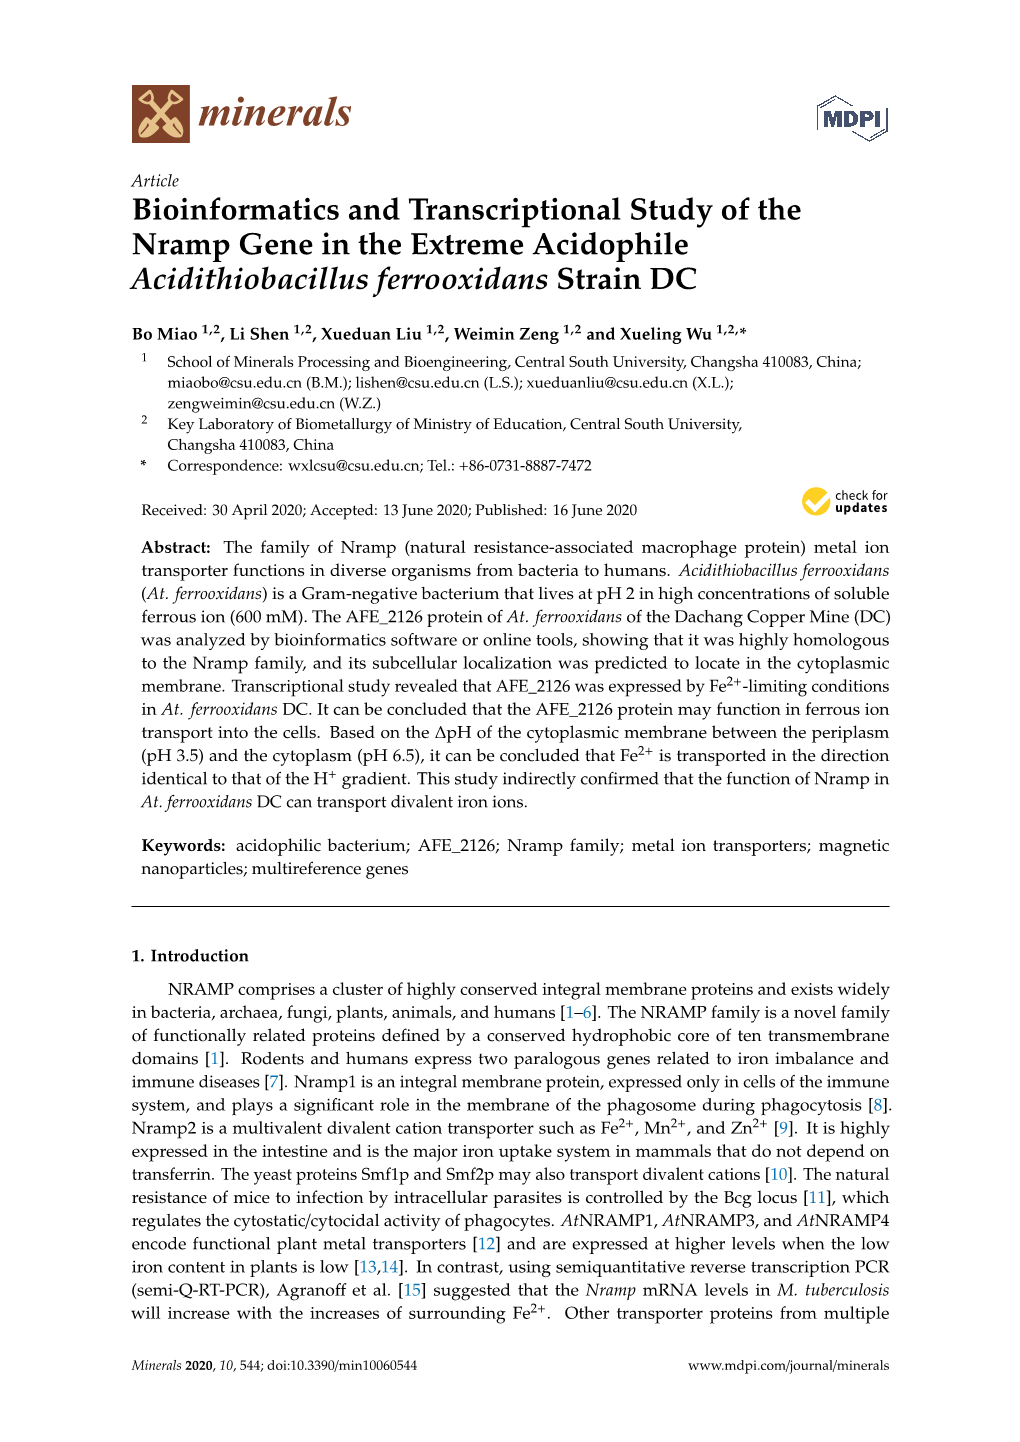 Bioinformatics and Transcriptional Study of the Nramp Gene in the Extreme Acidophile Acidithiobacillus Ferrooxidans Strain DC